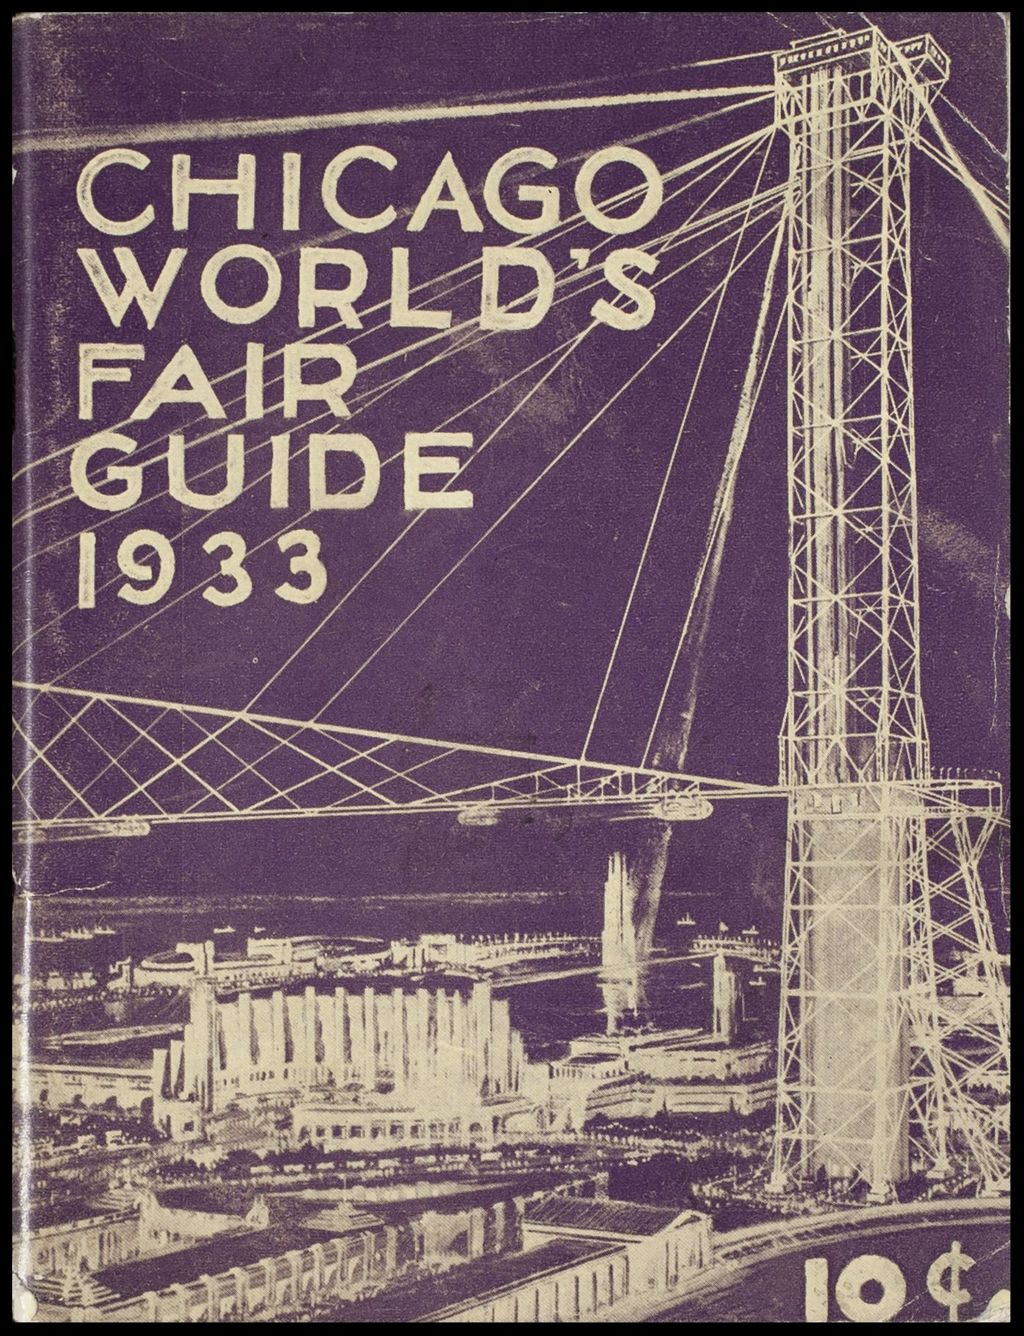 Miniature of Chicago World's Fair Guide, 1933-1934 (Folder 16-194)